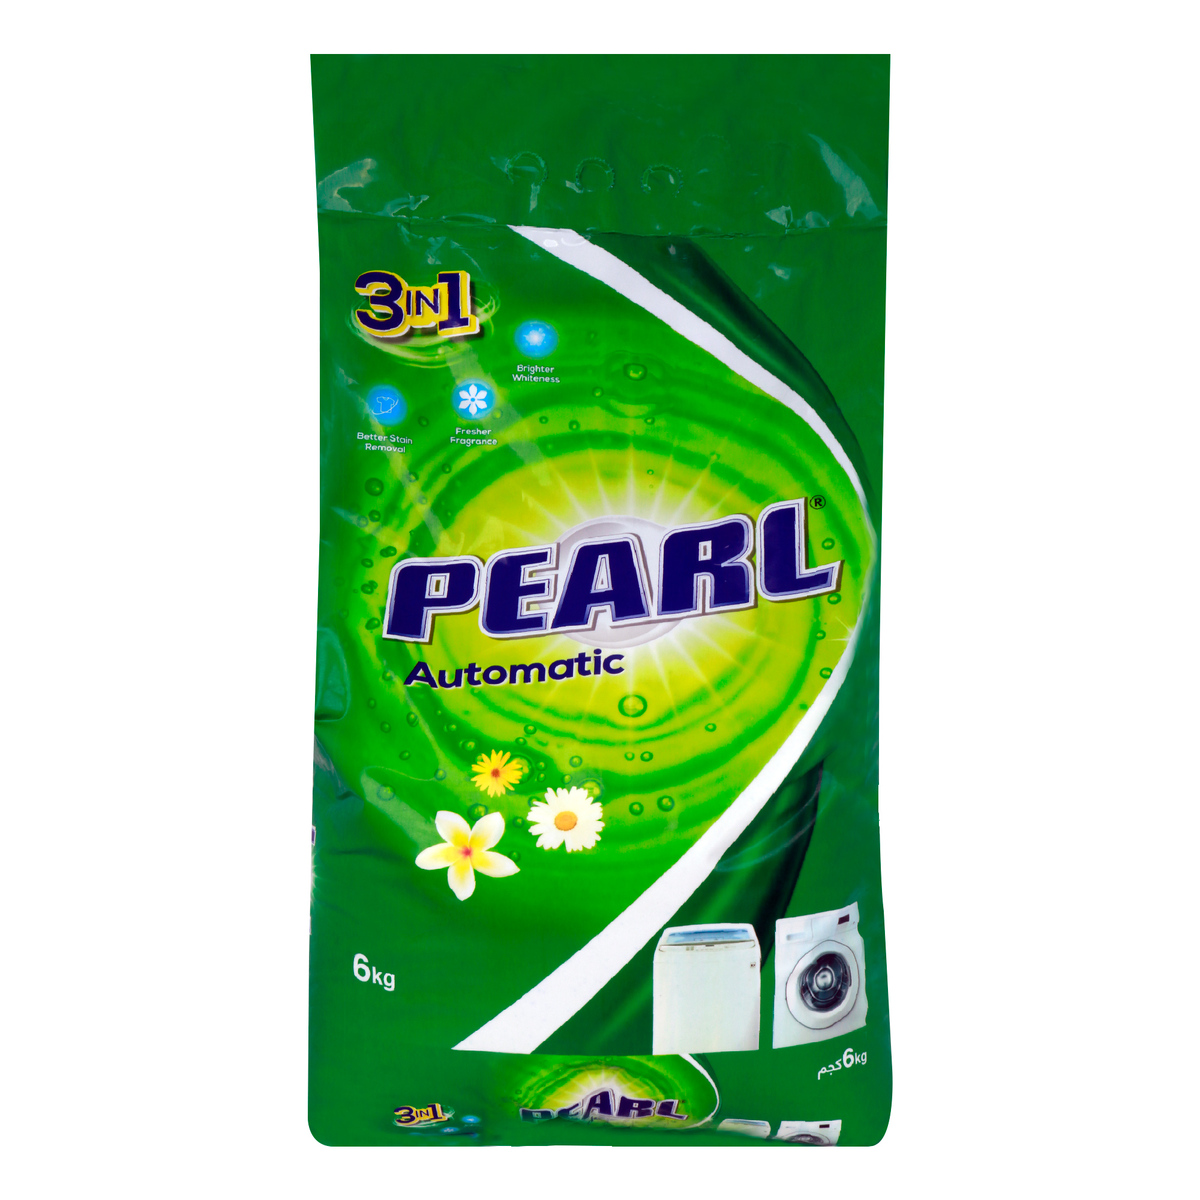 Pearl Automatic Washing Powder 3in1 6kg